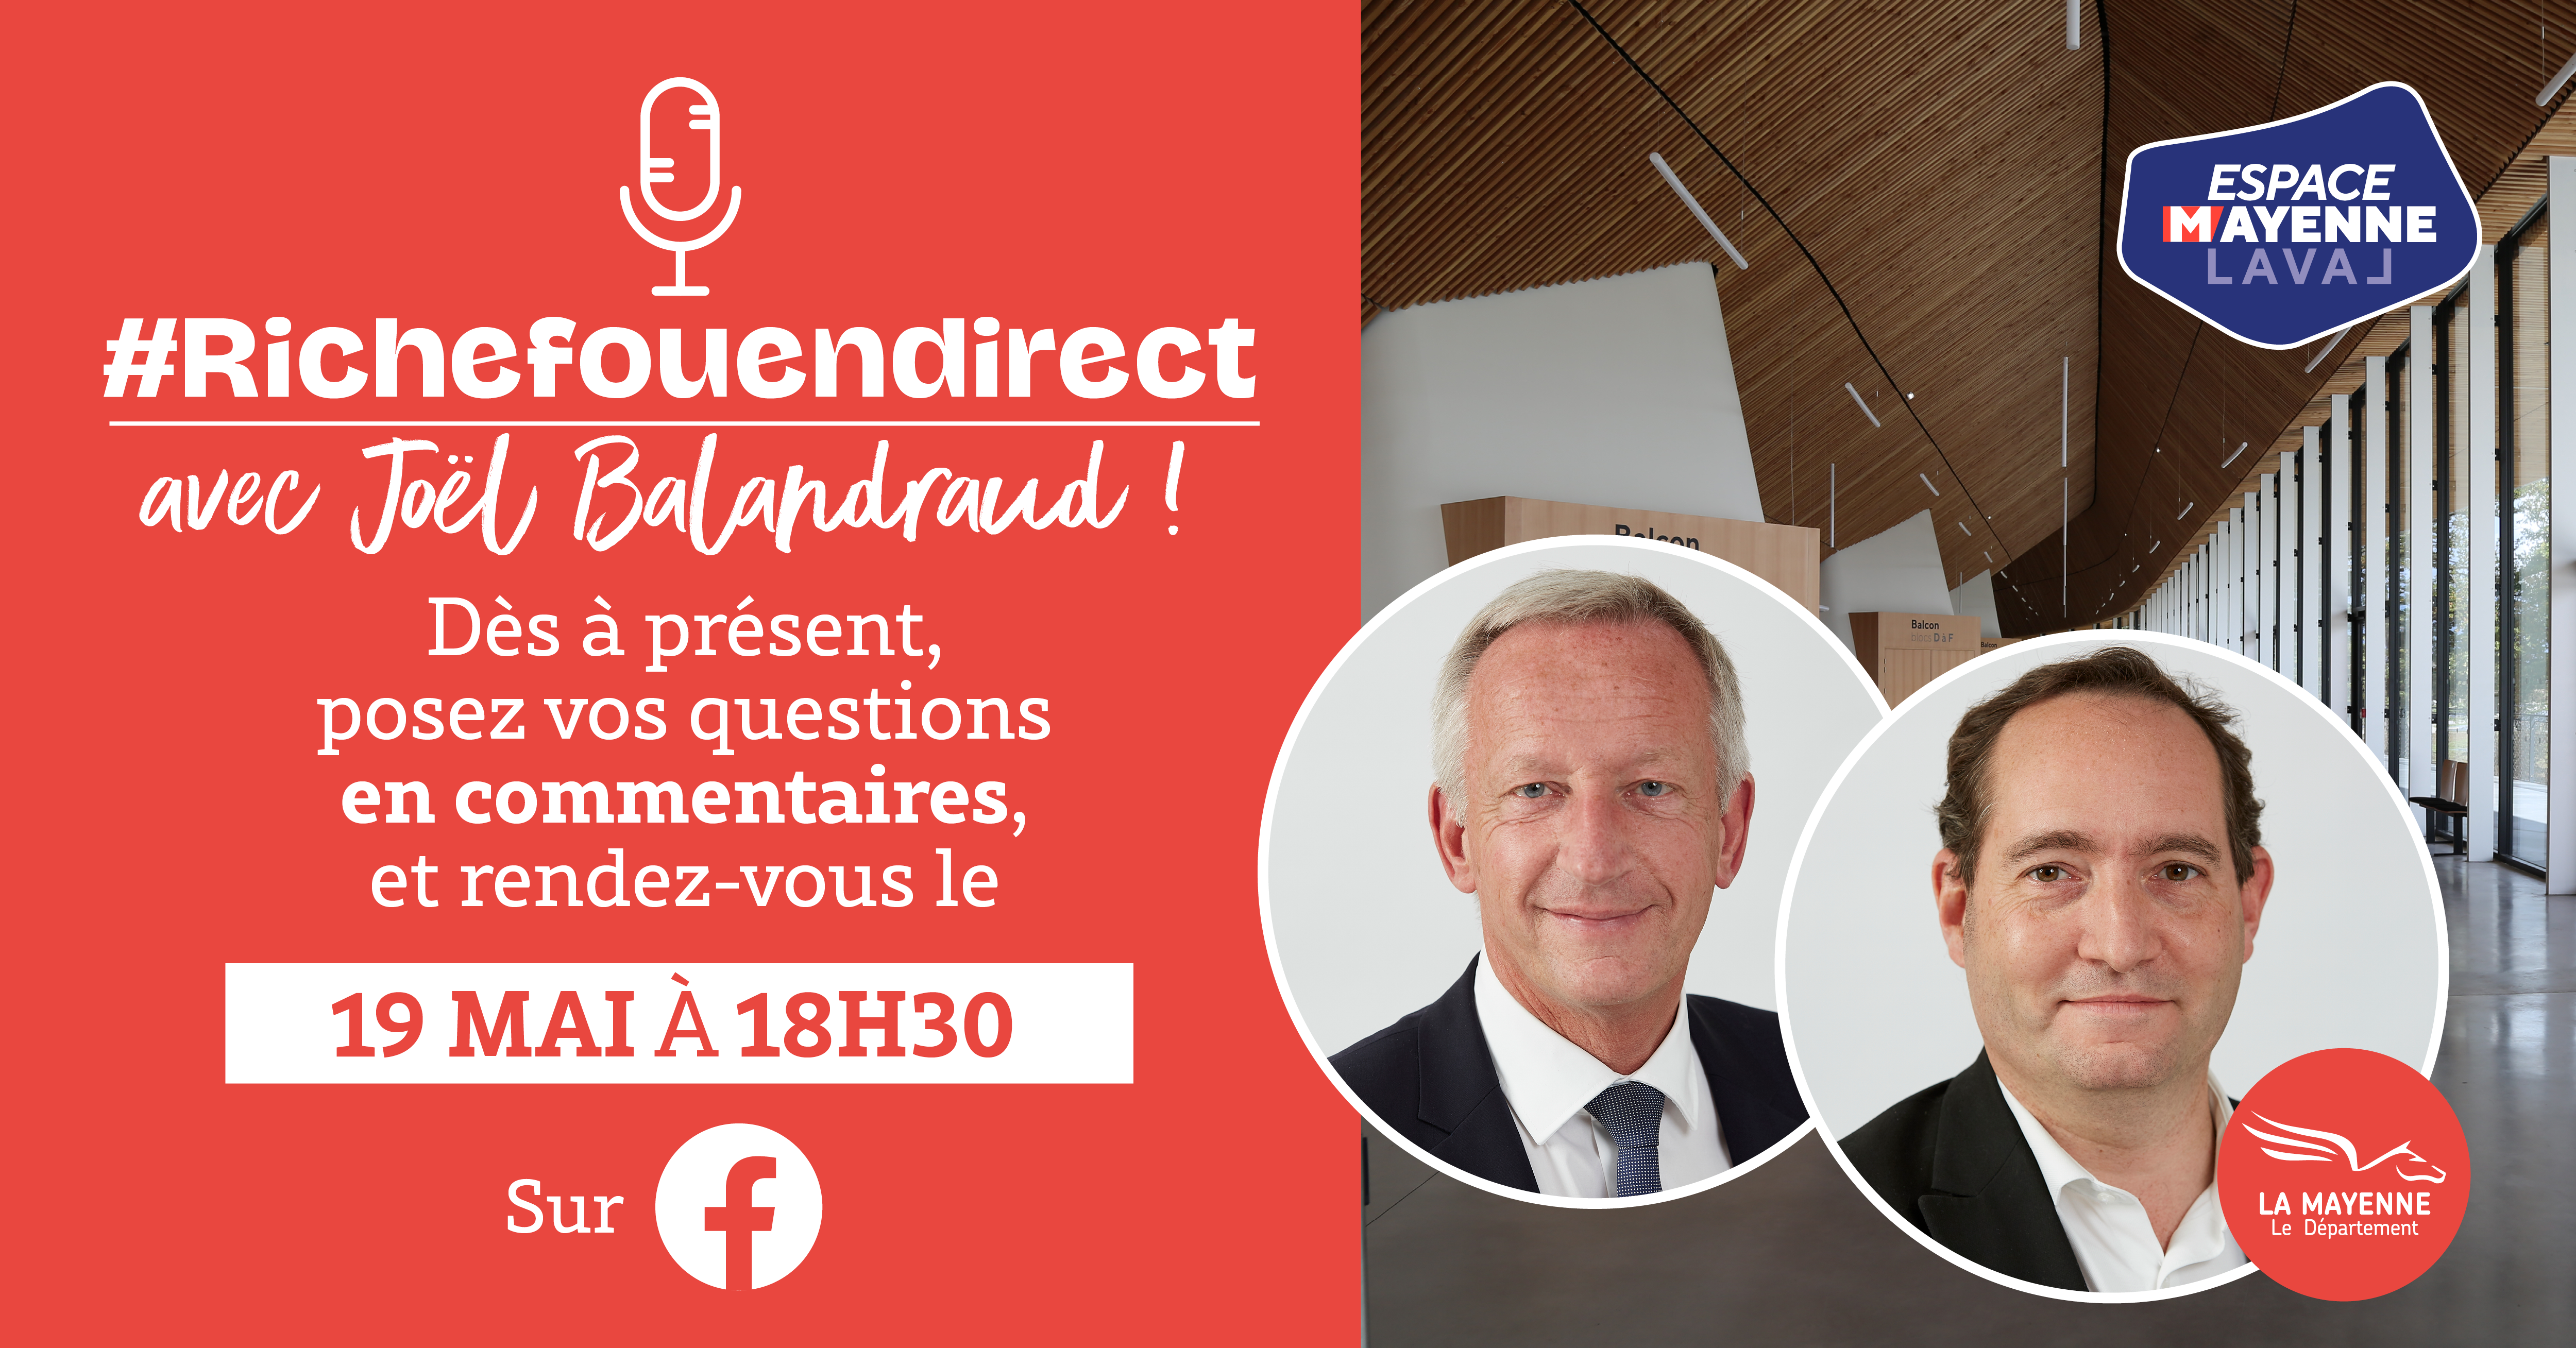 Facebook Live Espace Mayenne Richefou en direct Joël Balandraud